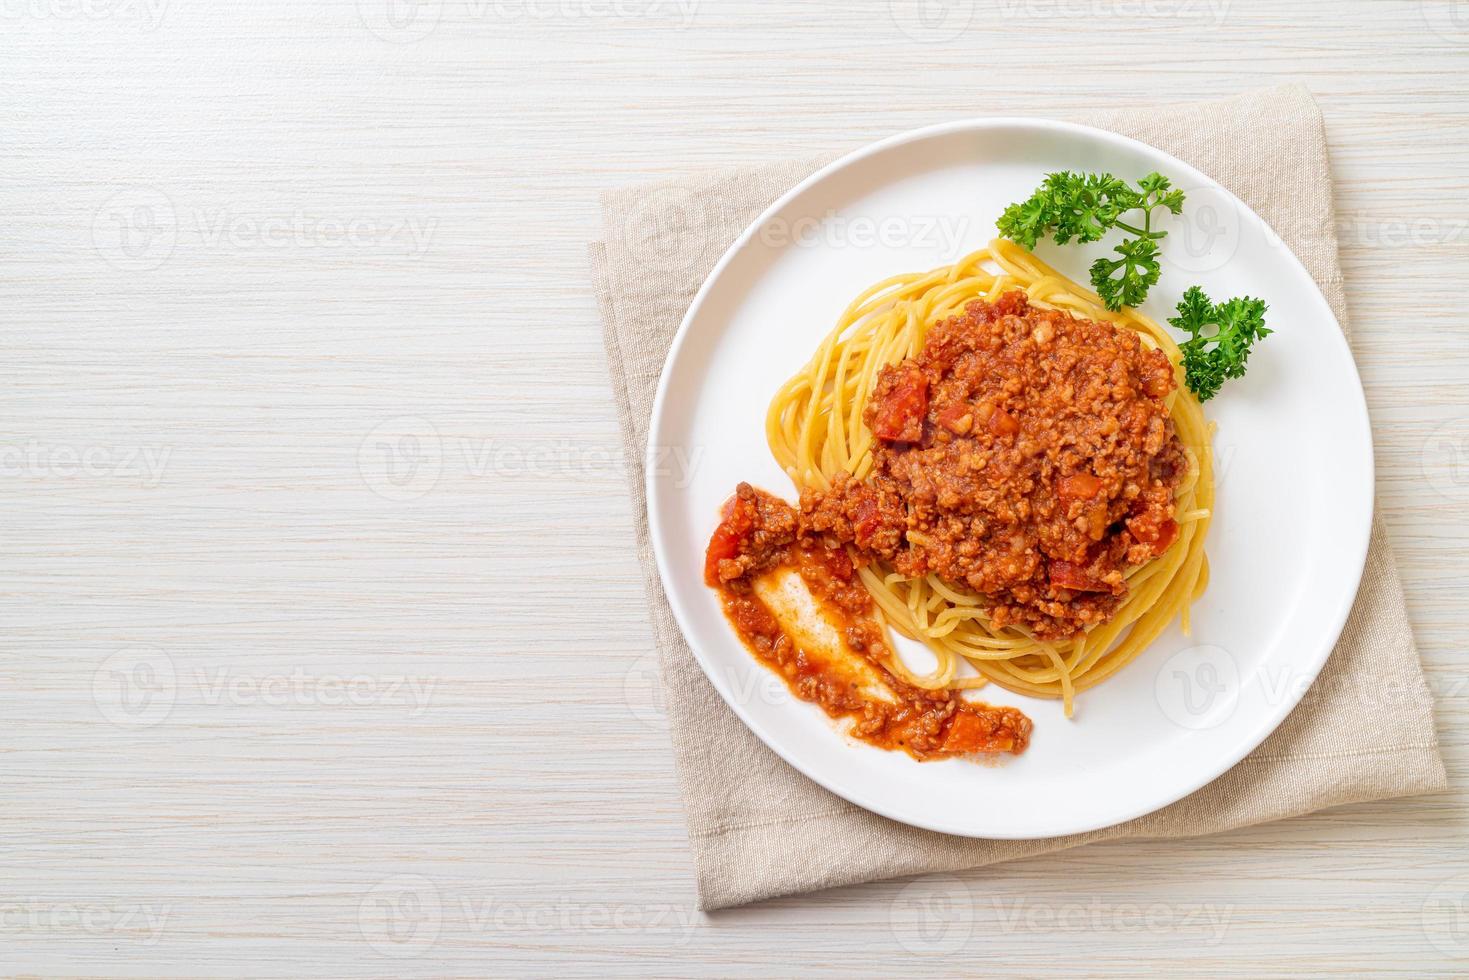 espaguetis de cerdo a la boloñesa o espaguetis con salsa de tomate de cerdo picada - estilo de comida italiana foto